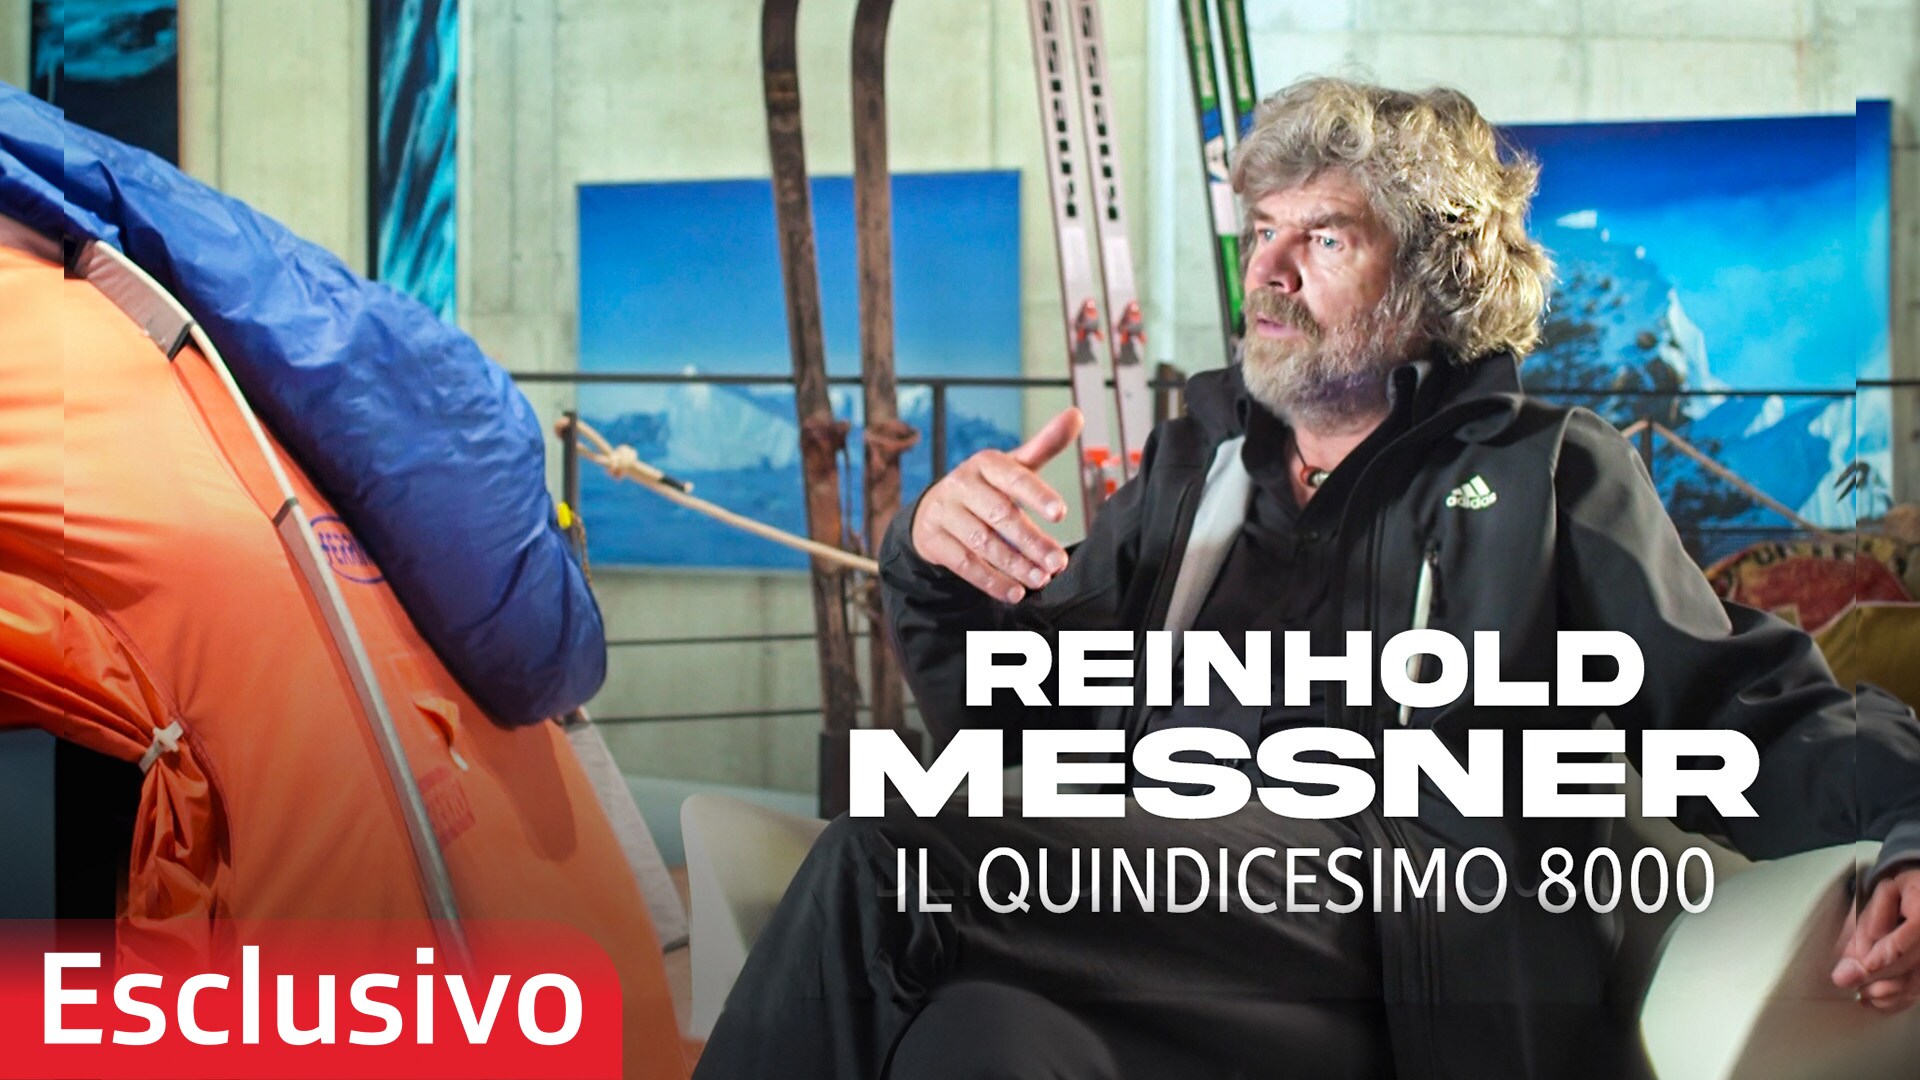 Reinhold Messner, il quindicesimo 8000